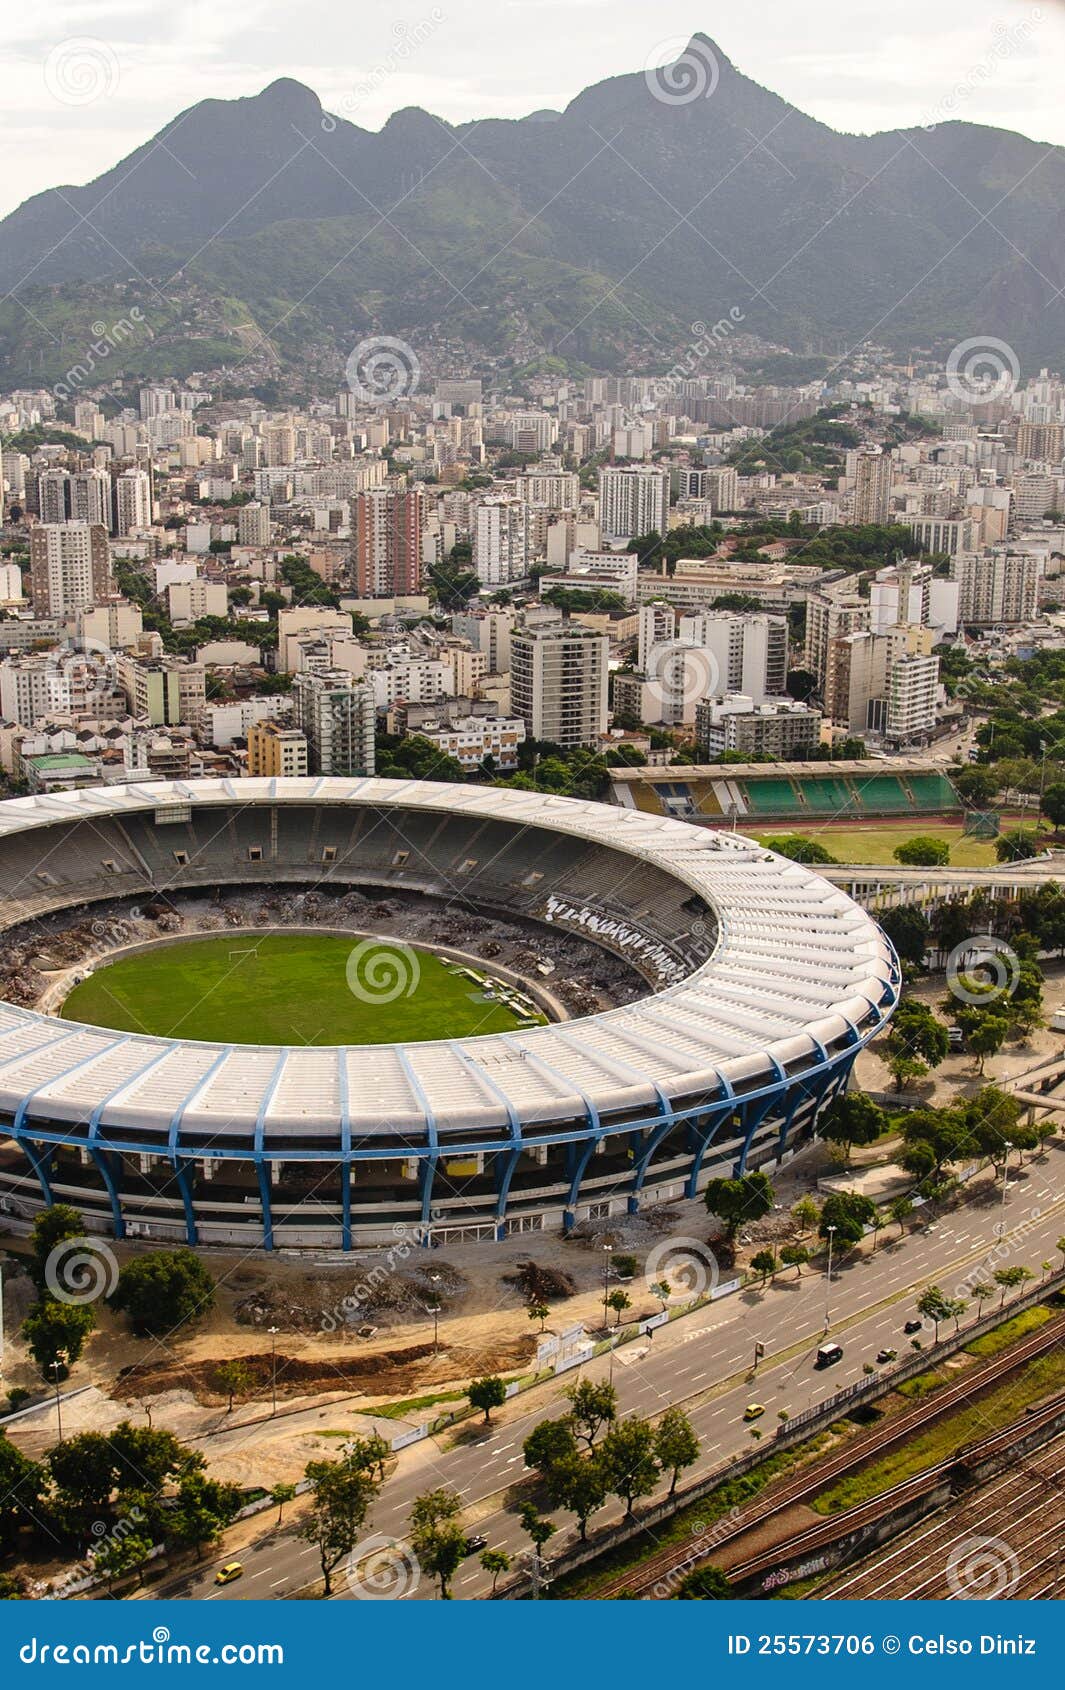 maracana stadium